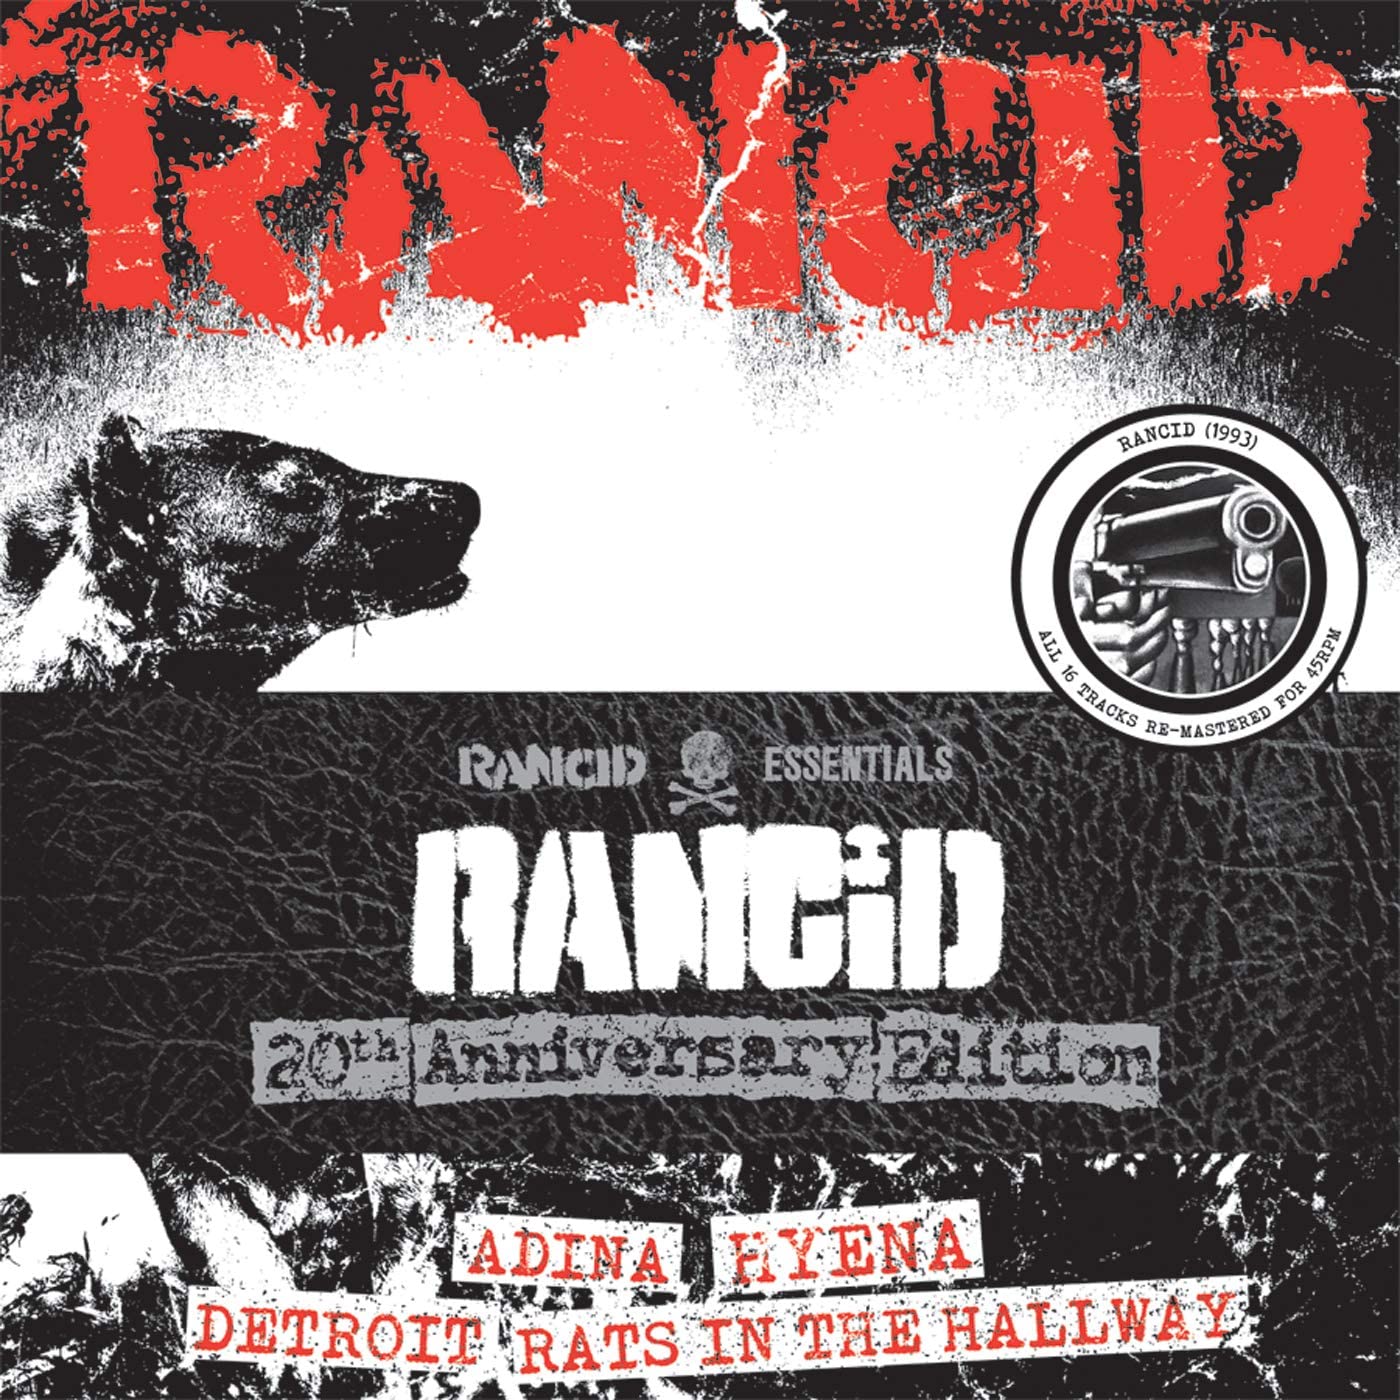 rancid 1993 tour